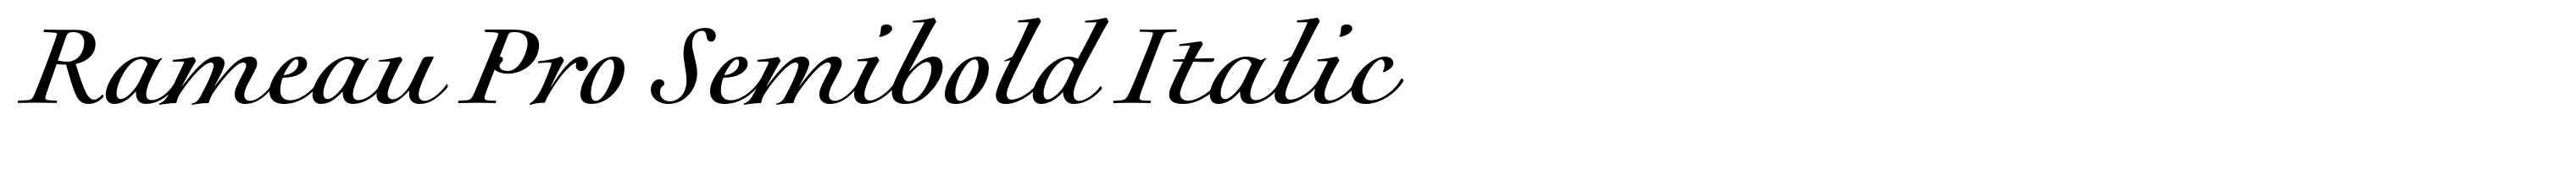 Rameau Pro Semibold Italic